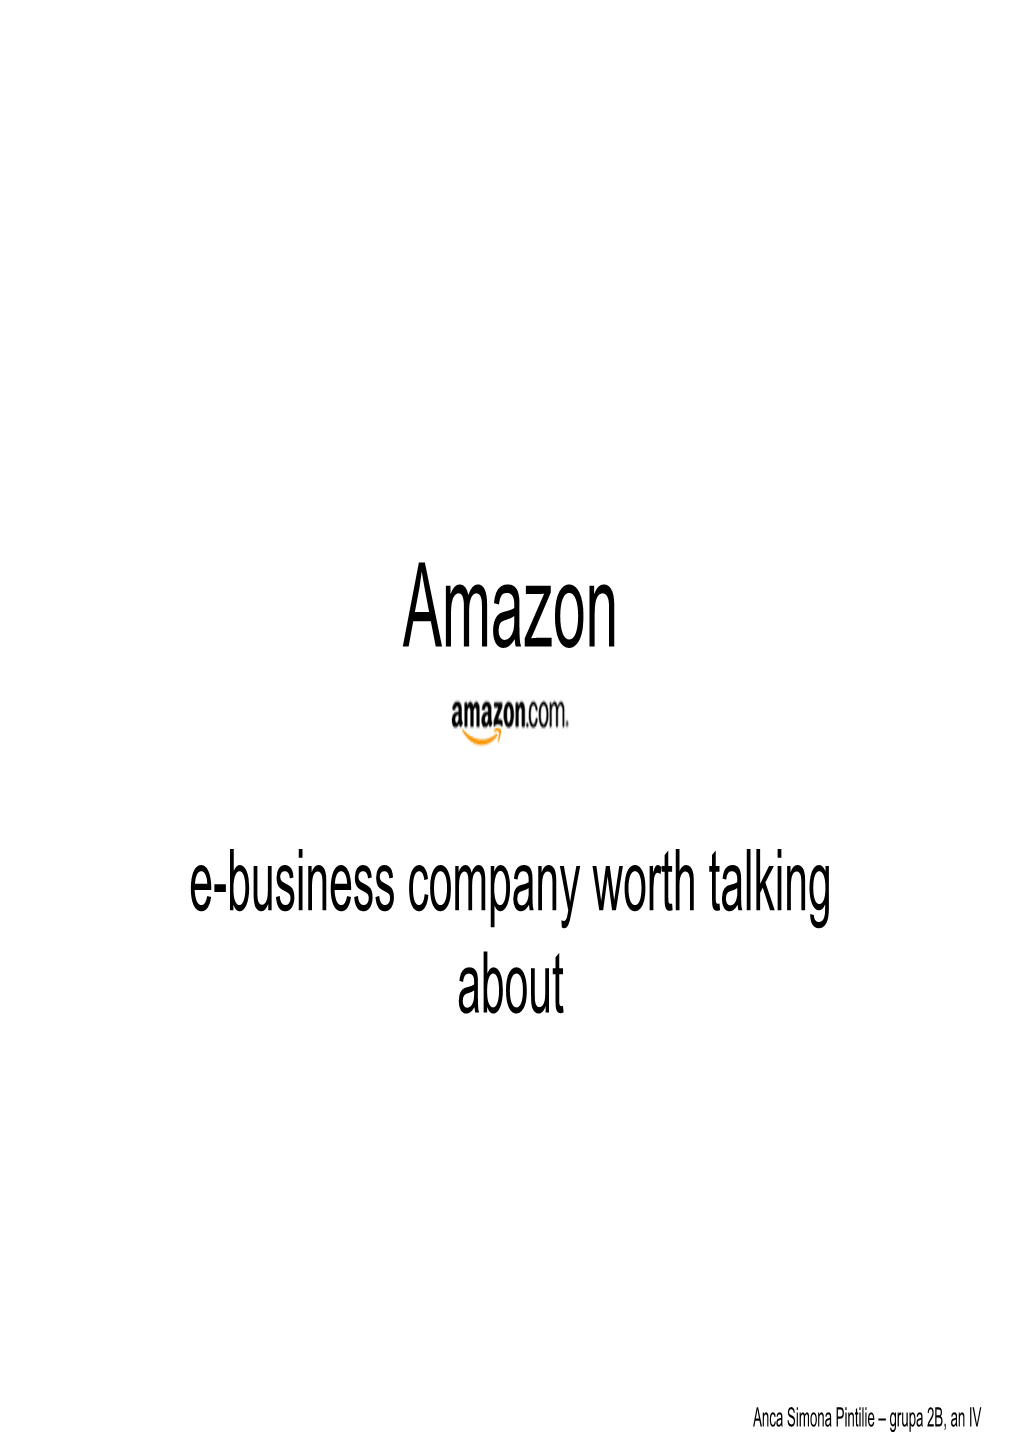 Amazon E-Business Company Worth Talking About